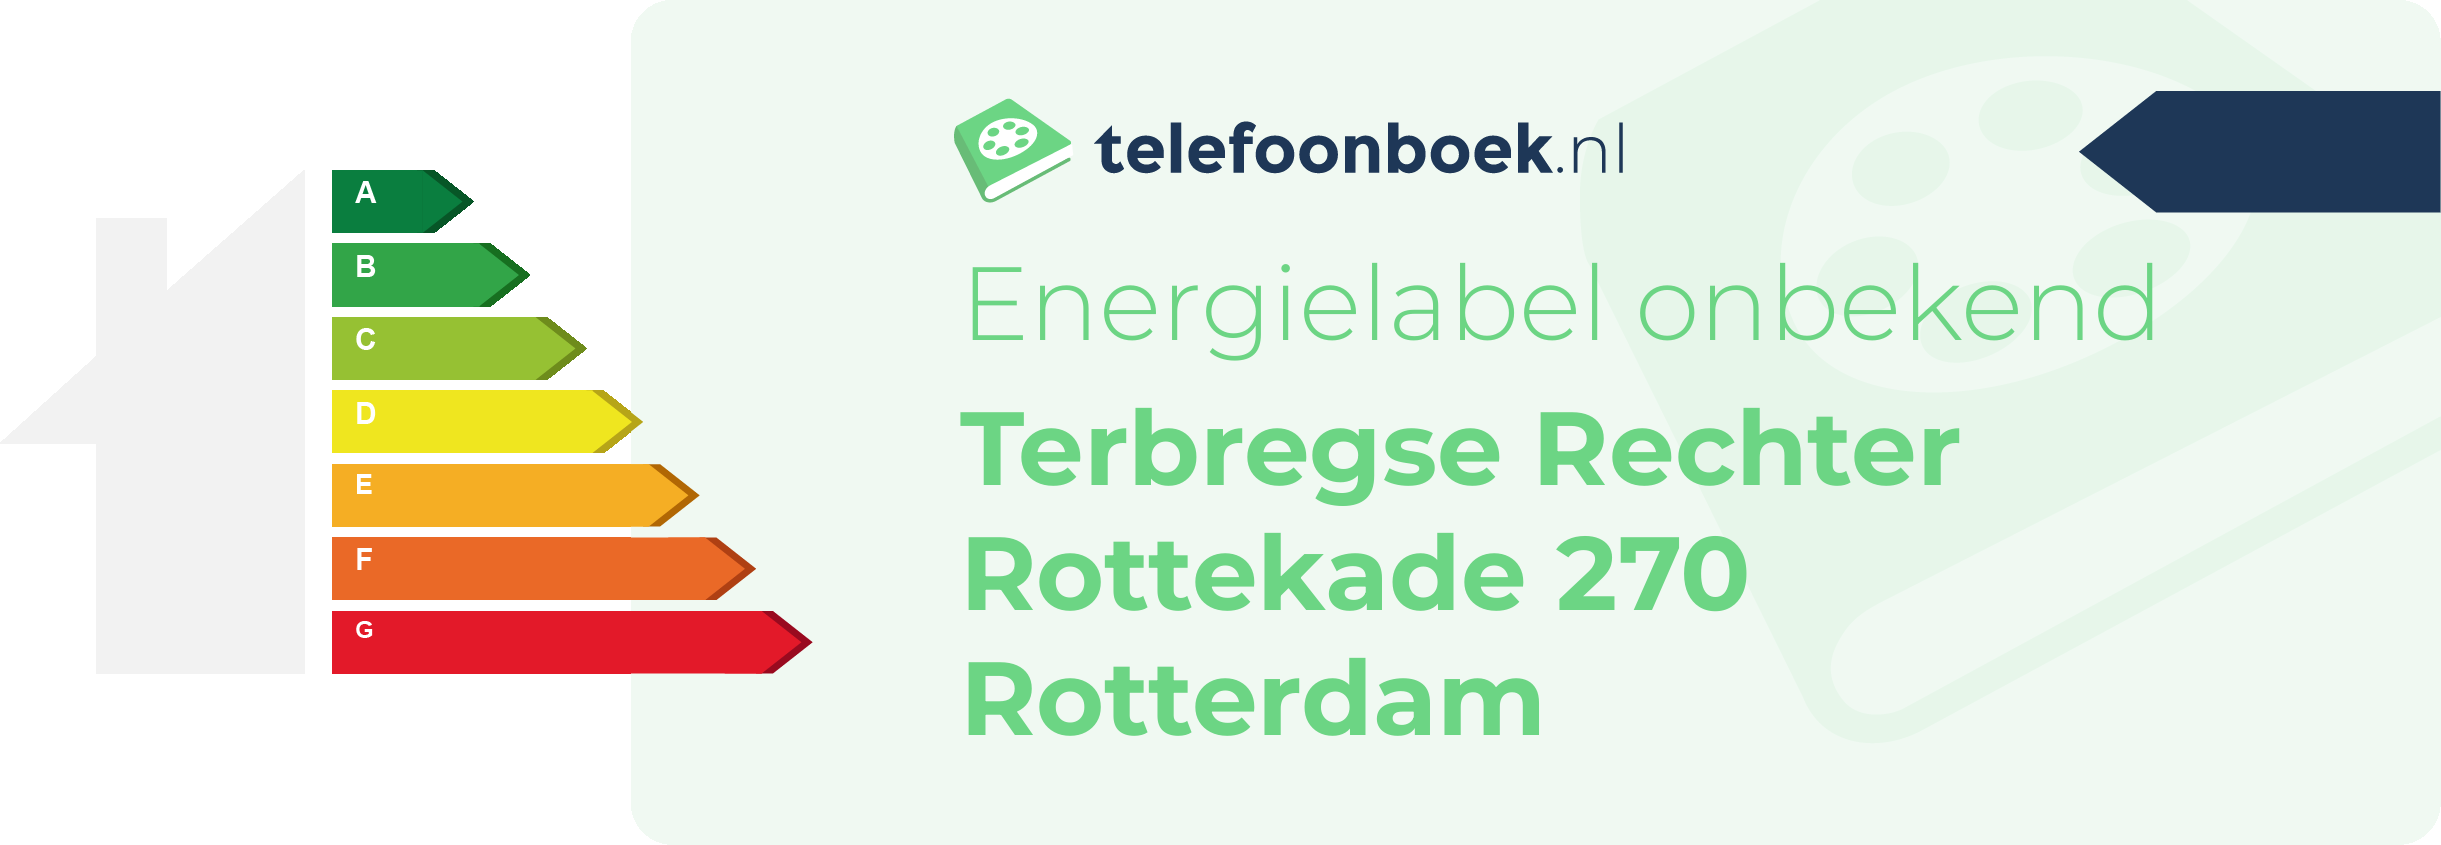 Energielabel Terbregse Rechter Rottekade 270 Rotterdam